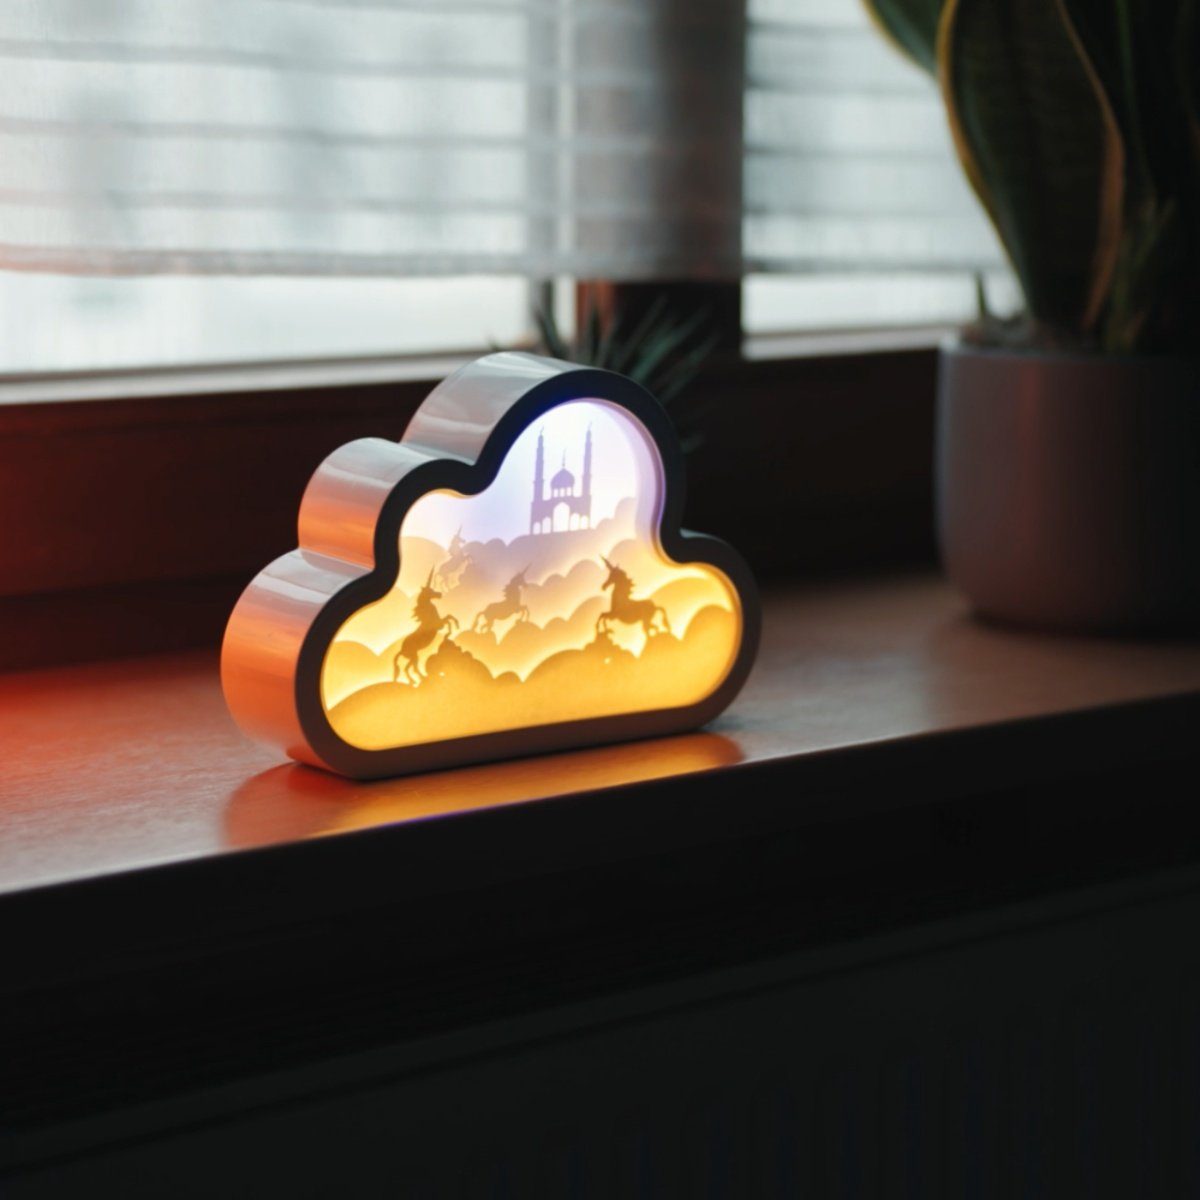 LED integriert, Nachtlicht, 20x4x13cm, Fantasy, - Wohnaccessoire, Warmweiß, CLOUD Lichtbox Dekoration CiM fest Shadowbox, Papercut kabellose 3D LED